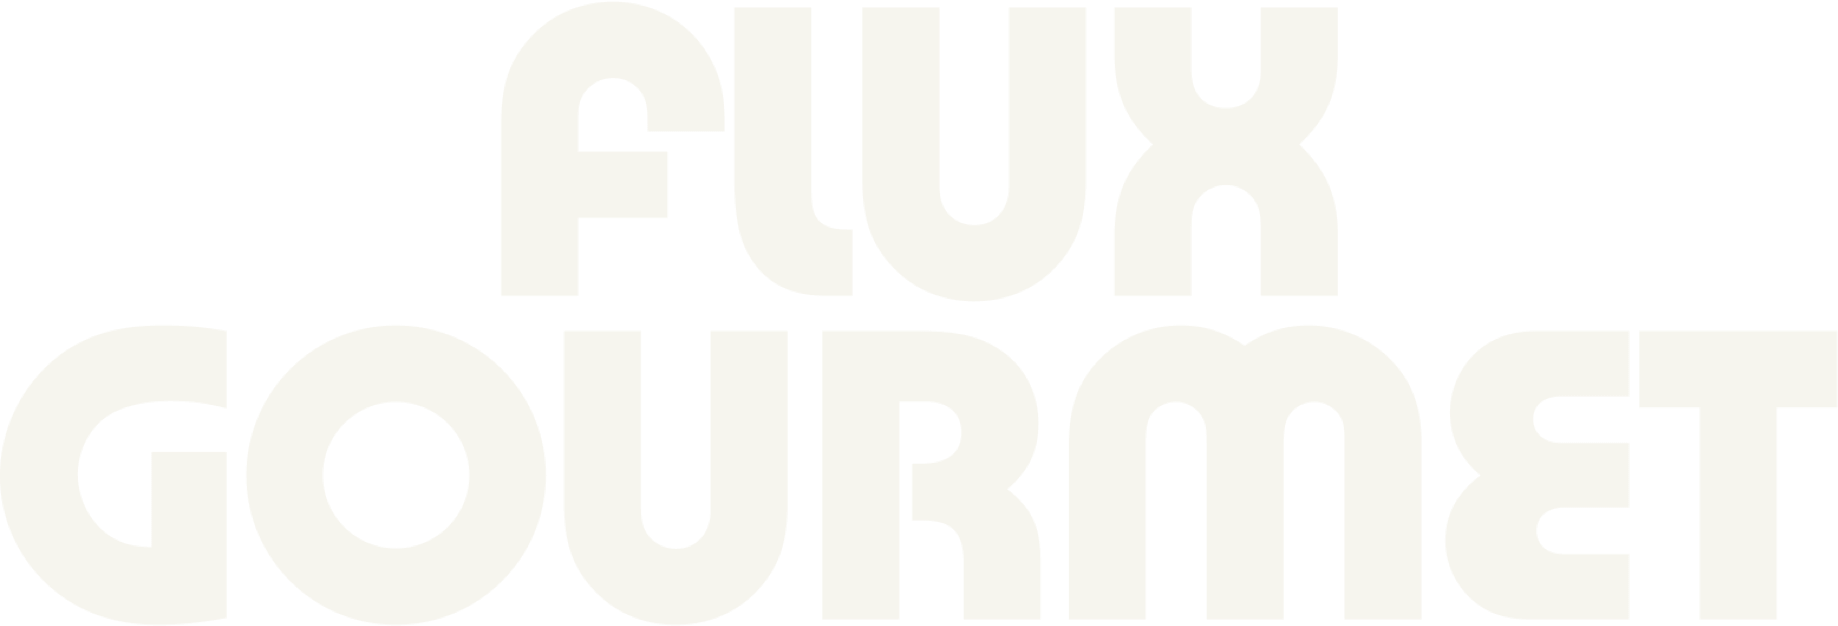 Flux Gourmet logo